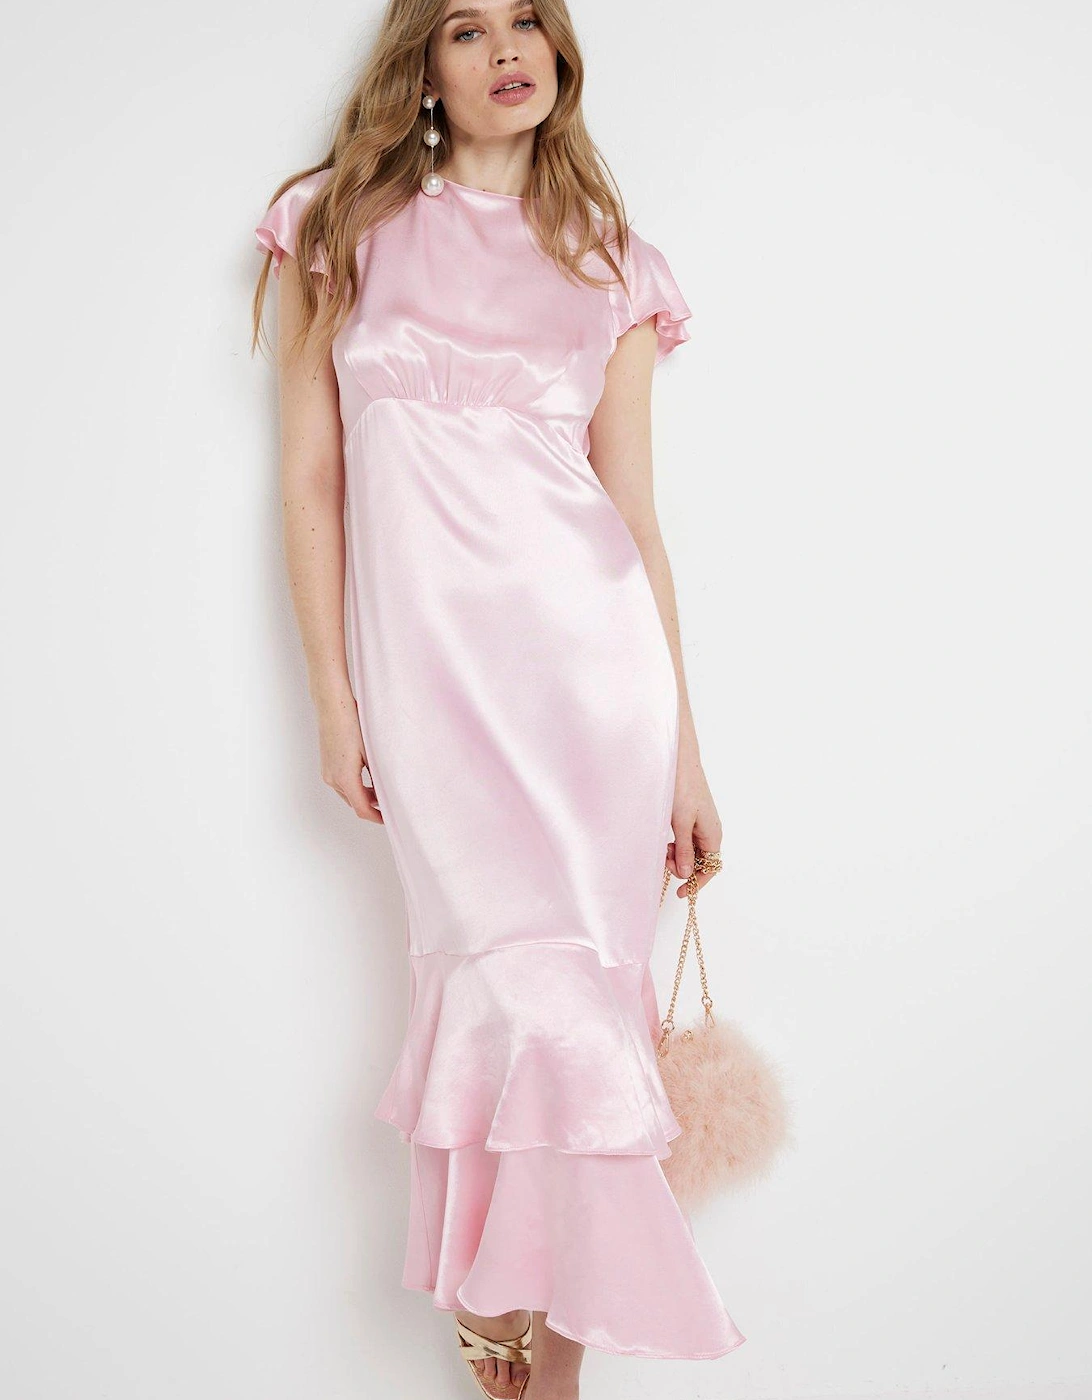 Seam Detail Tea Dress - Medium Pink